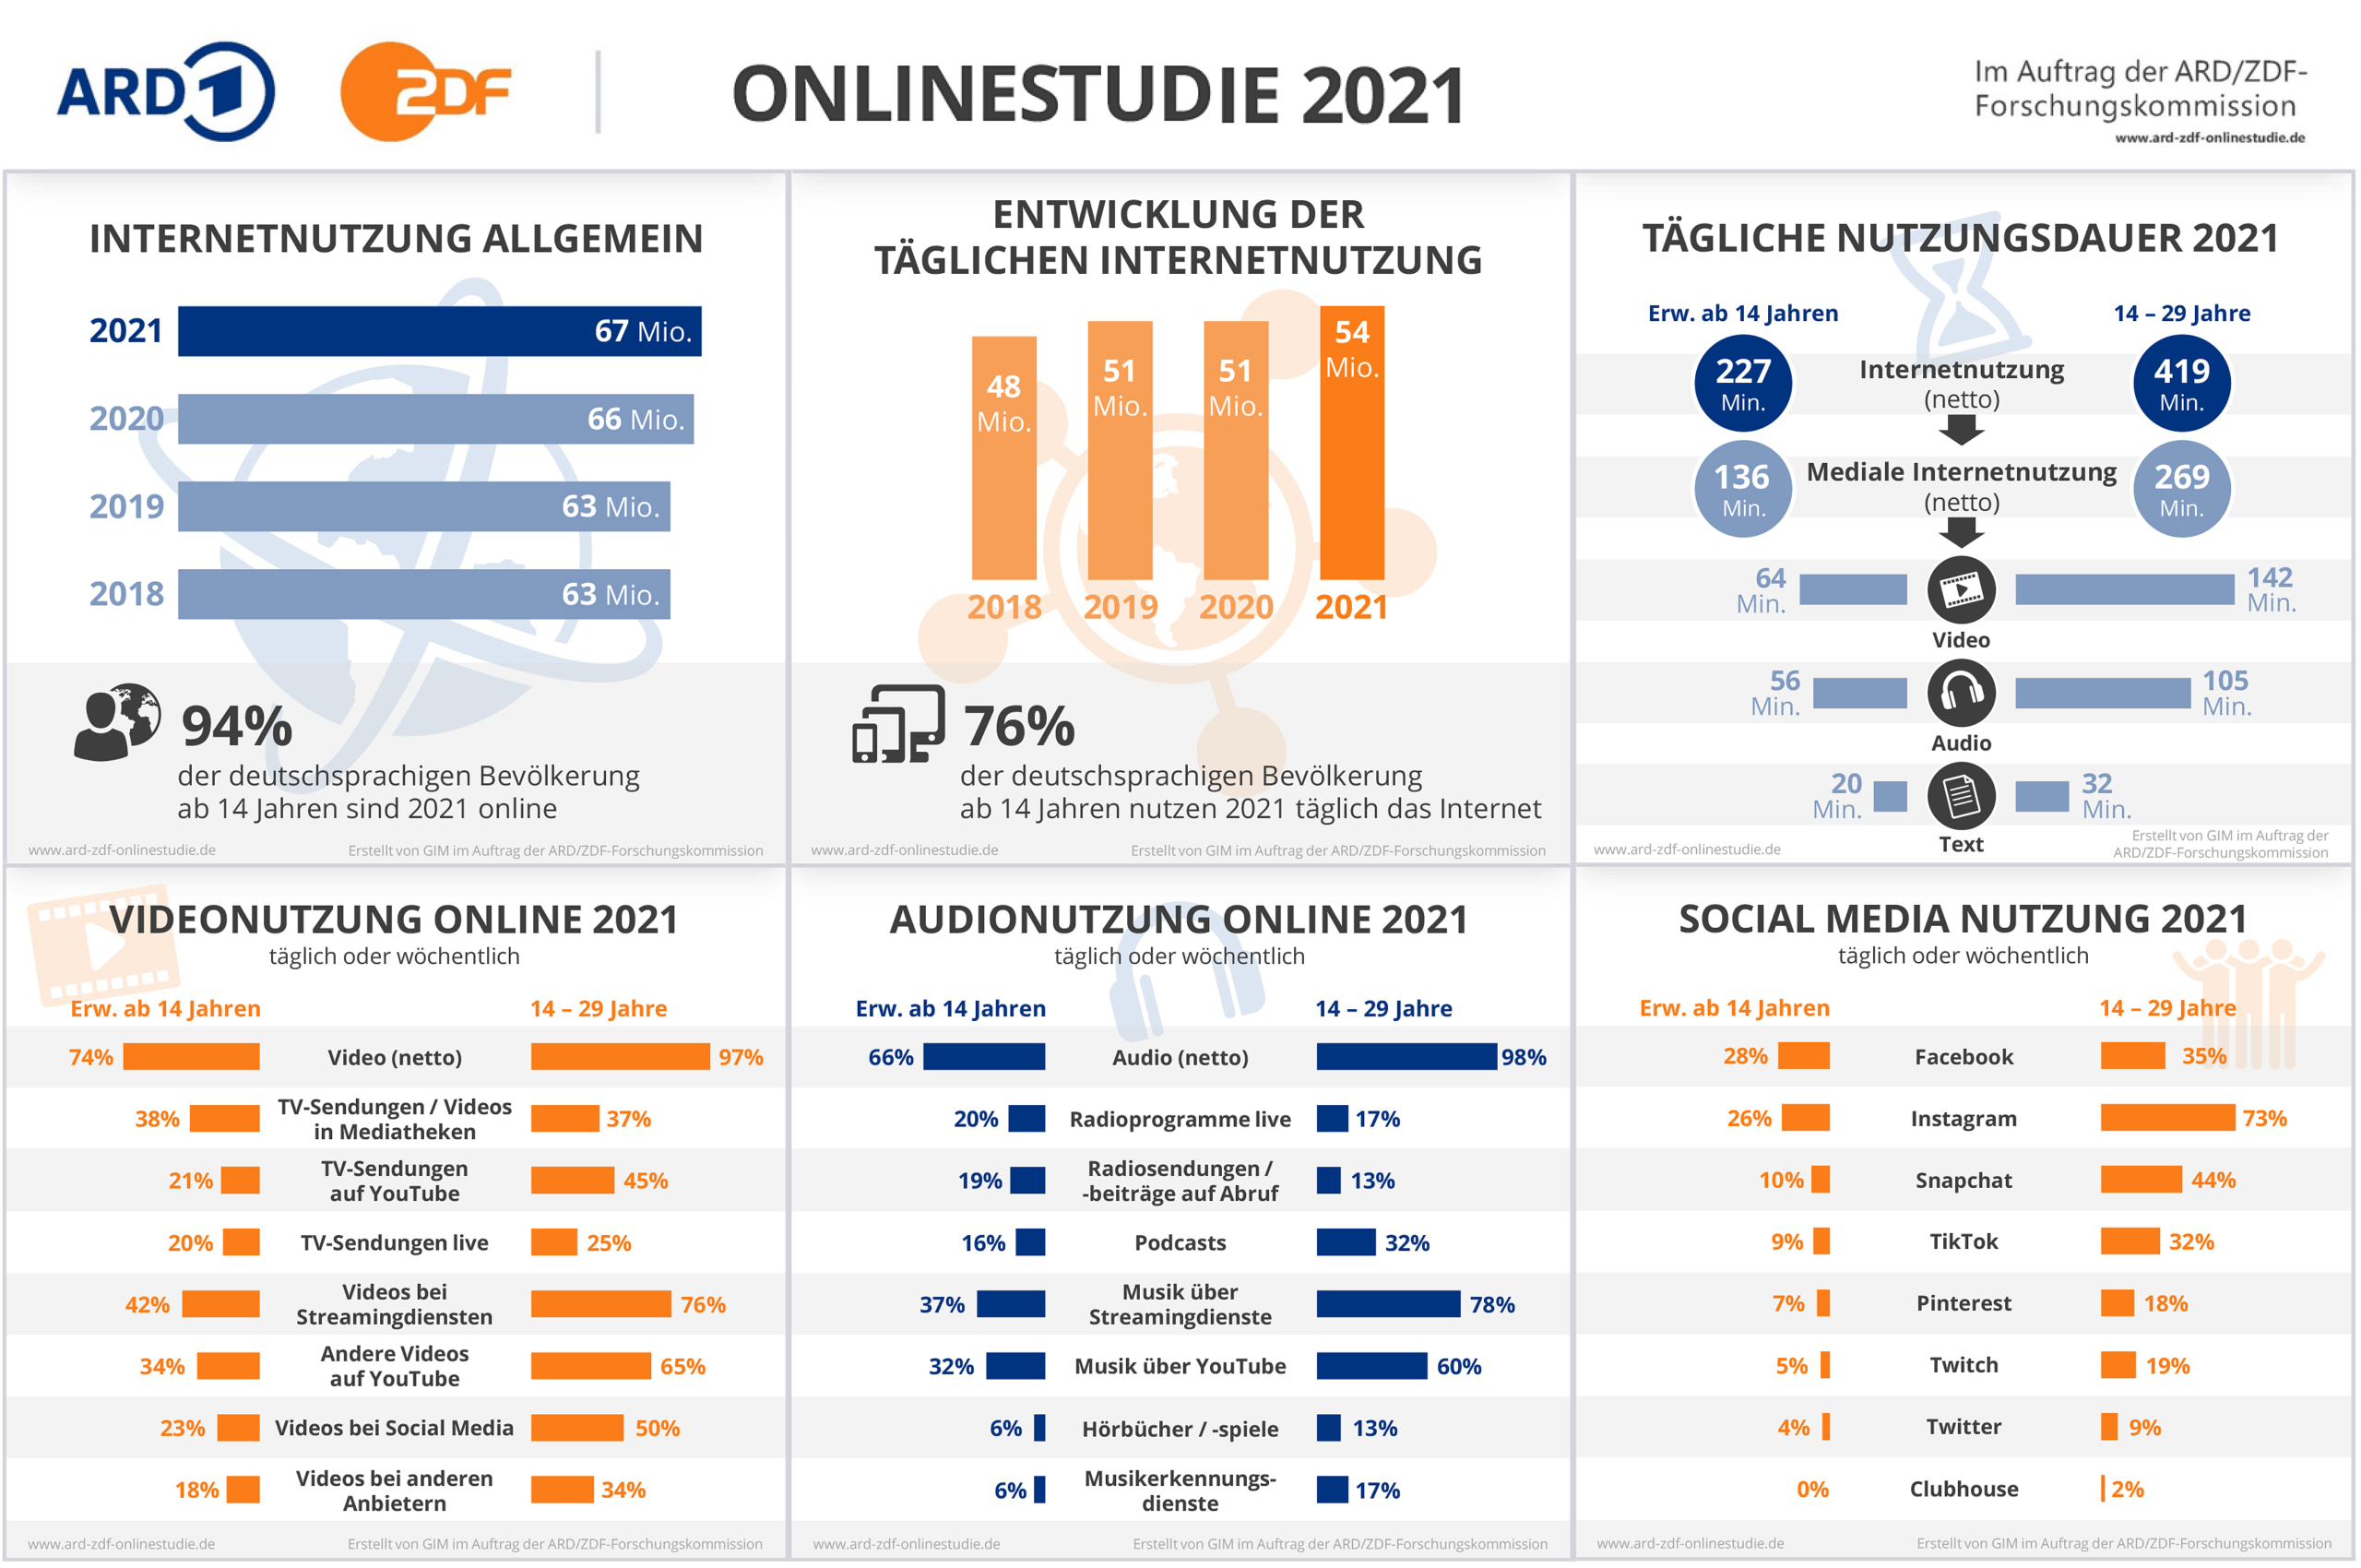 ard-zdf-onlinestudie-2021-infografik